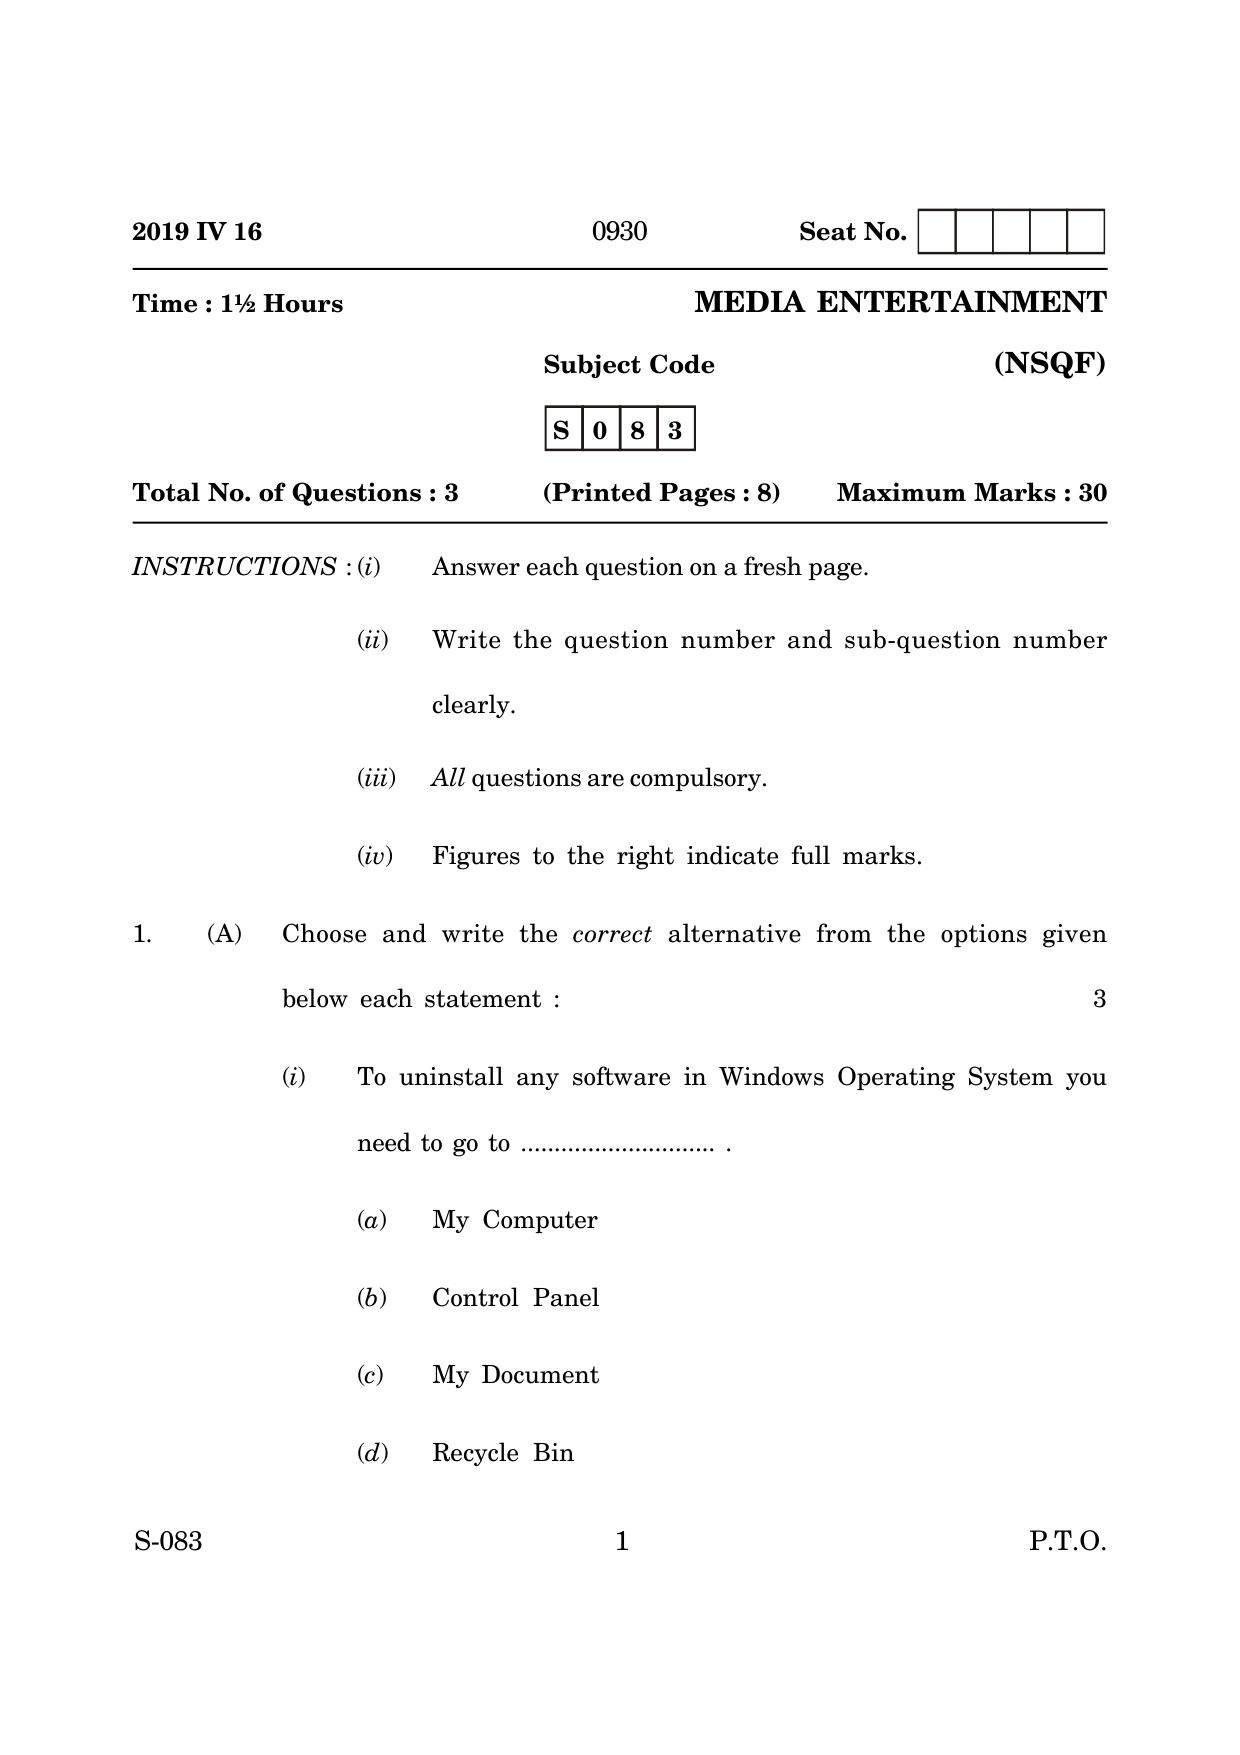 Goa Board Class 10 Media Entertainment  (March 2019) Question Paper - Page 1